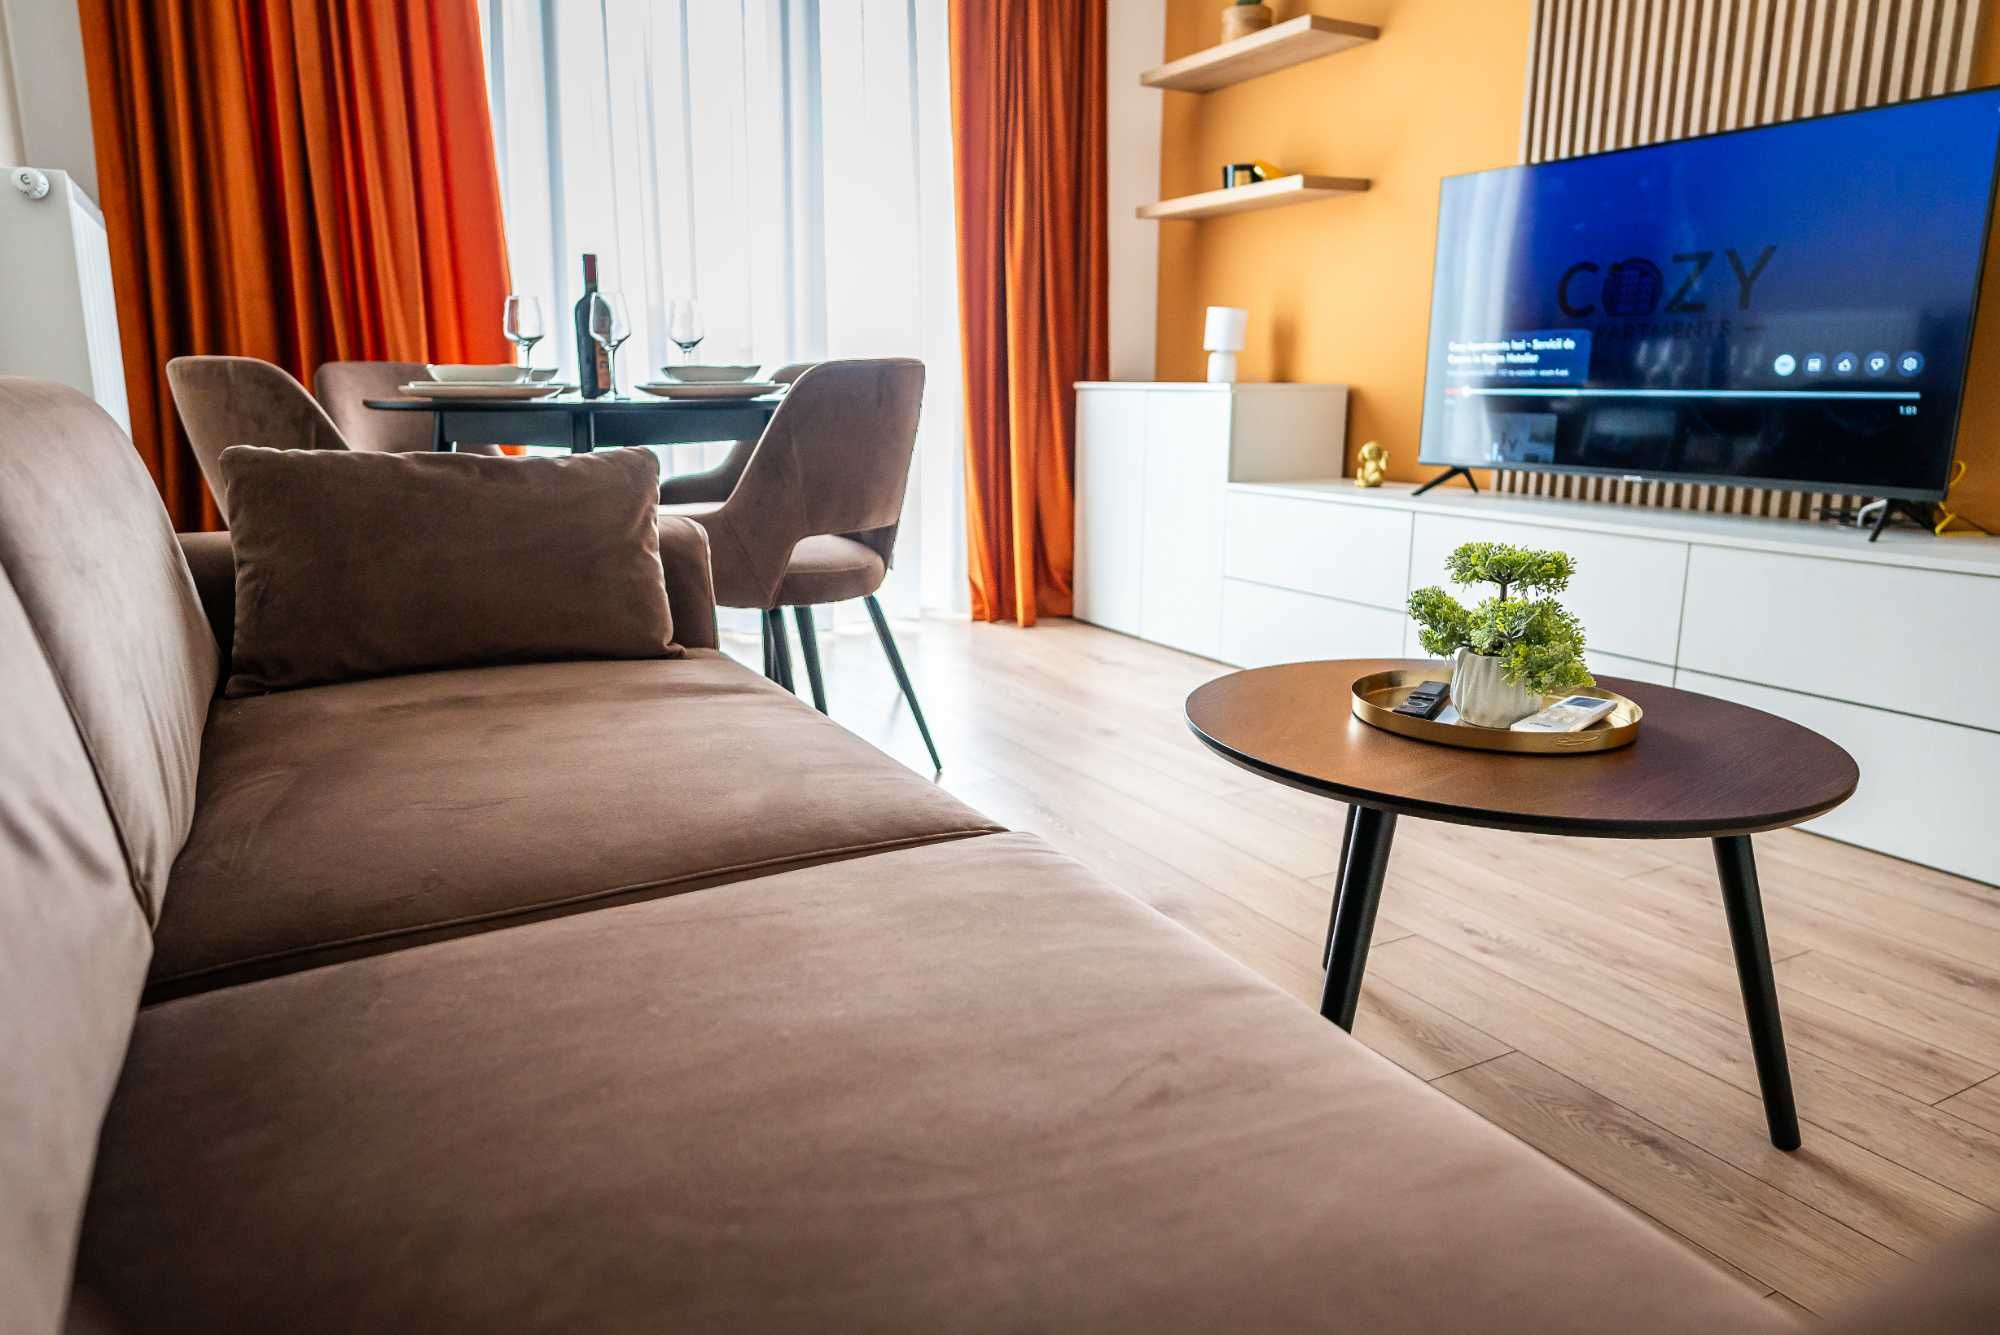 Apartamente Regim Hotelier - Business / Delegatii / Vouchere Vacanta